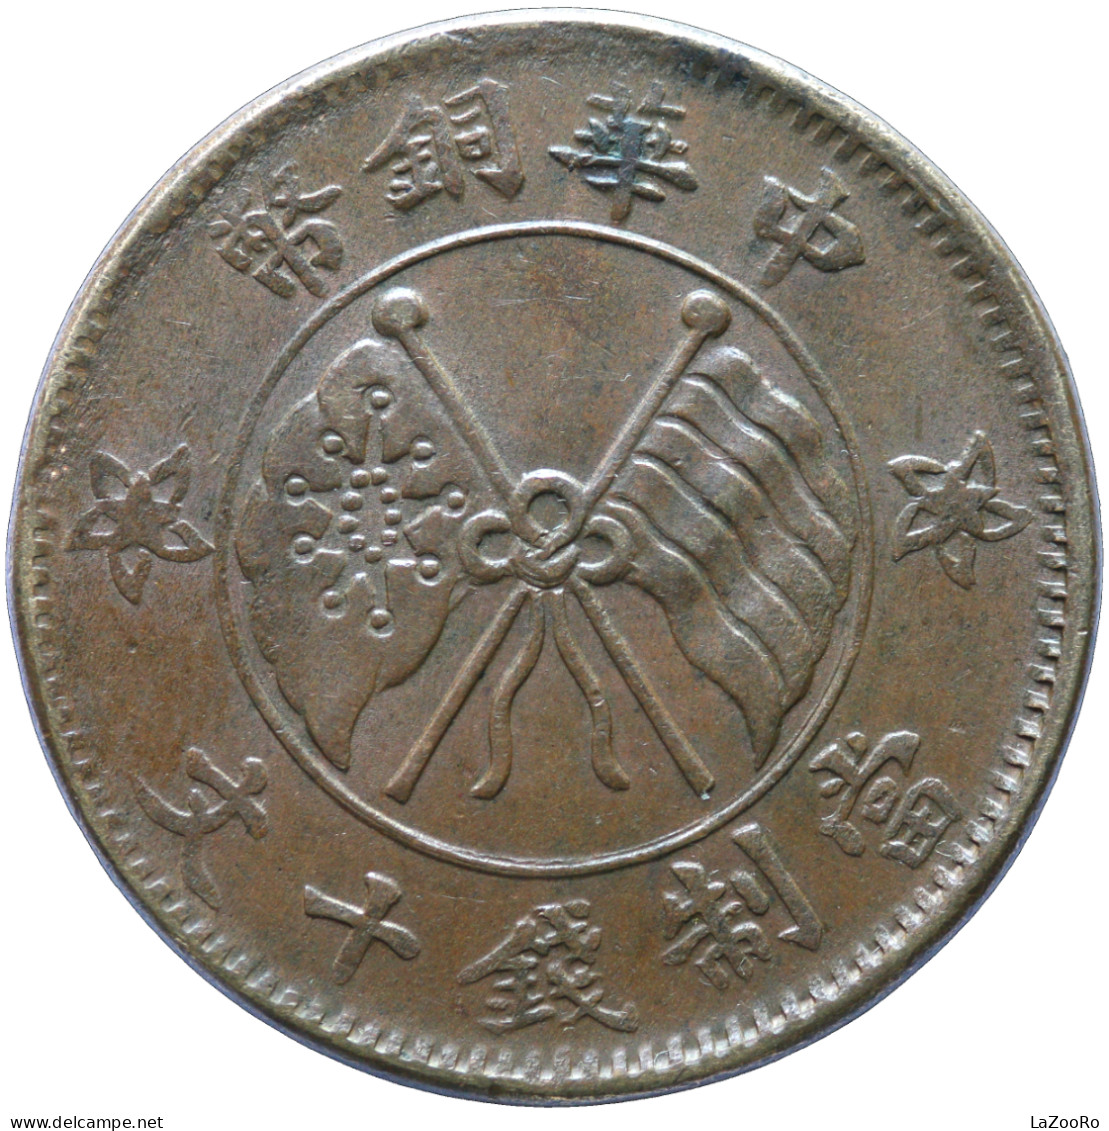 LaZooRo: China 10 Cash 1919 XF / UNC Founding Of The Republic 3rd Issue - China